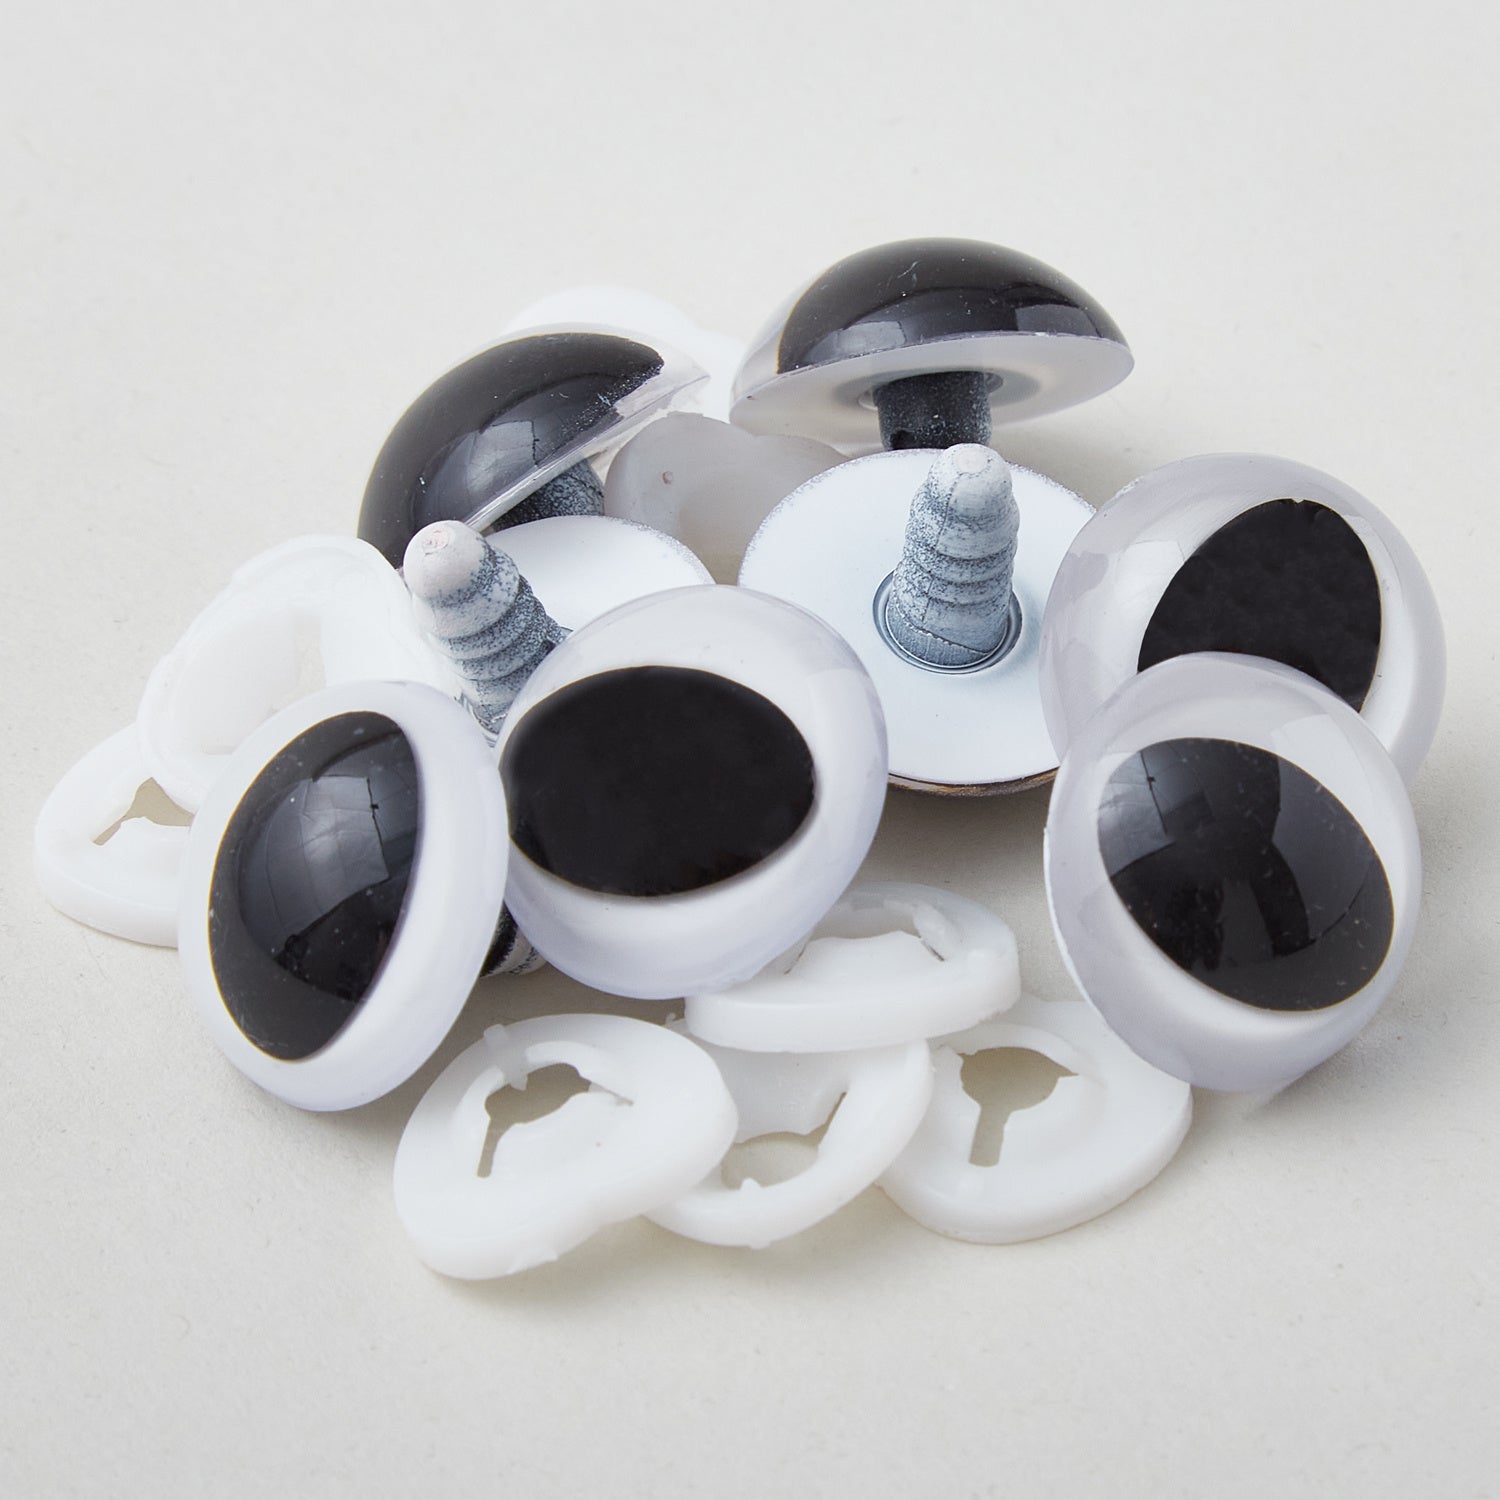 Plastic Slit Pupil Safety Eyes - 30mm White - 4 Pairs